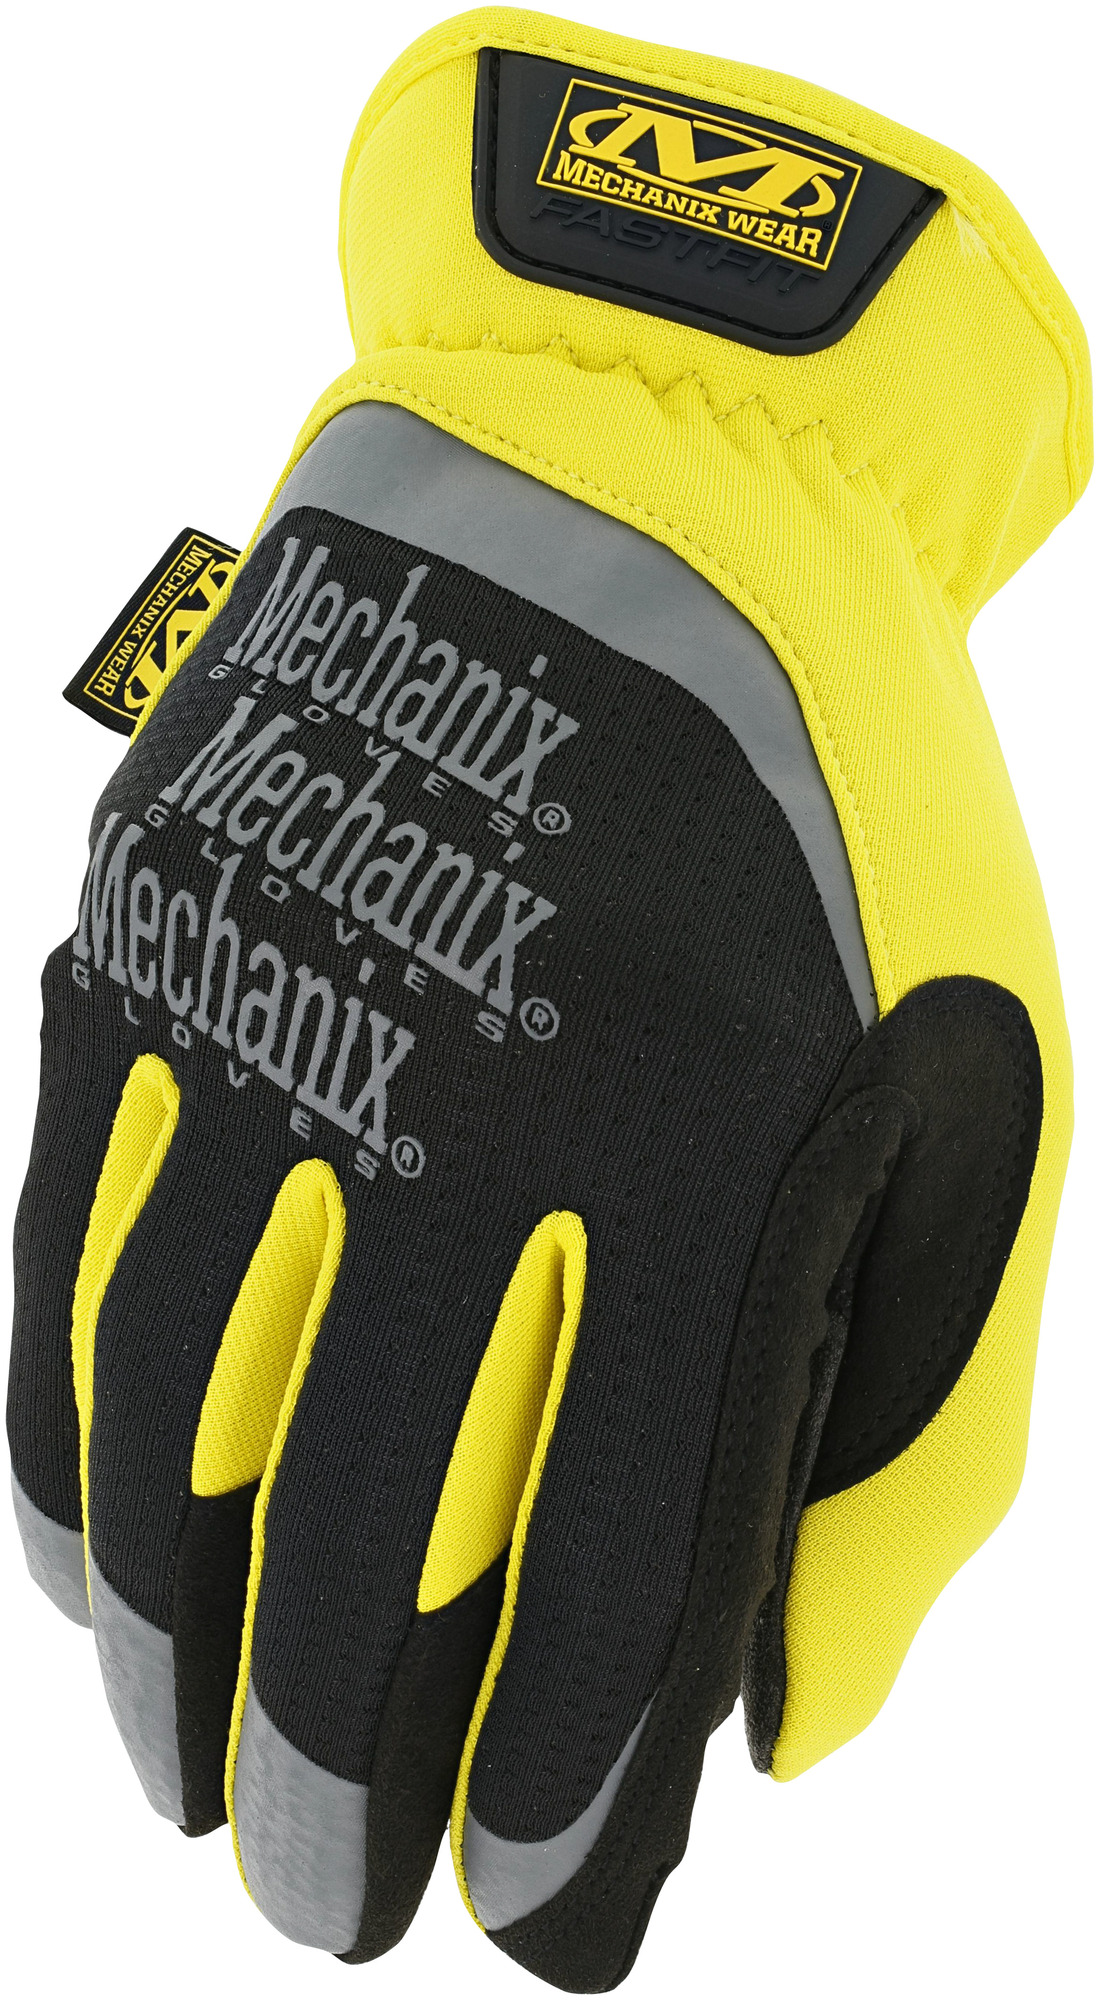 MECHANIX Pracovné rukavice so syntetickou kožou FastFit - žlté M/9